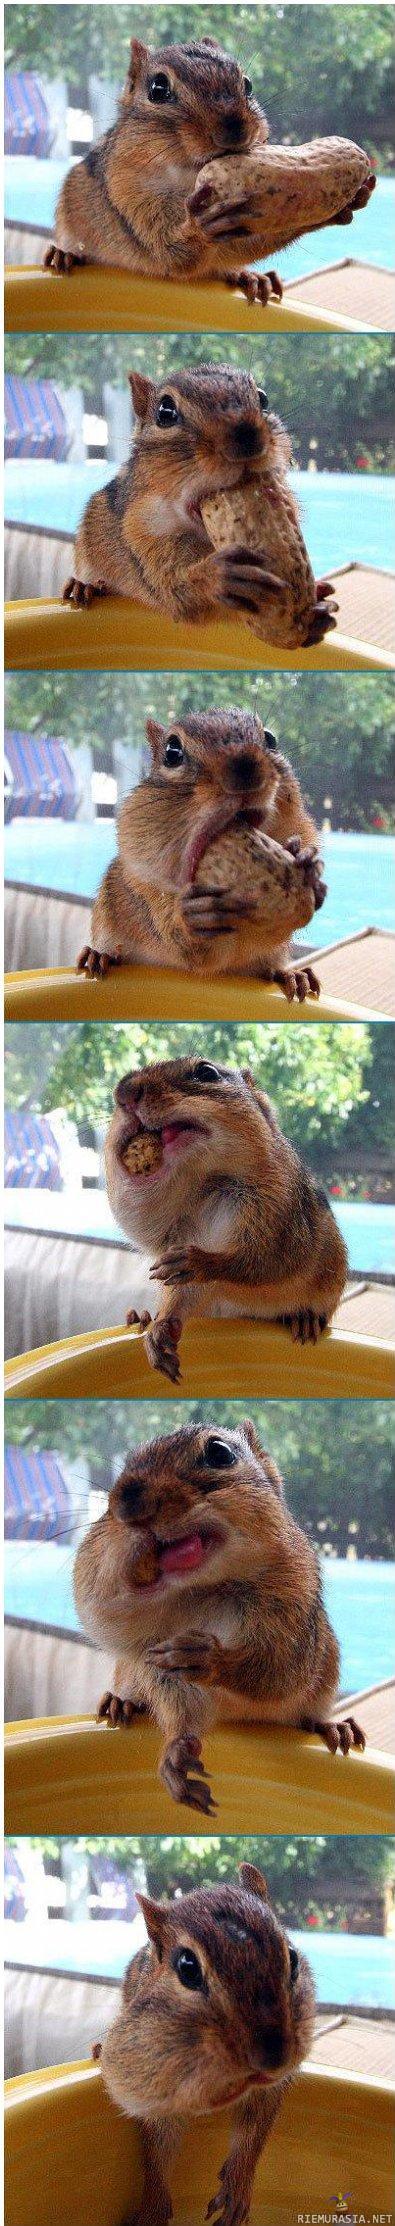 orava ja iso pähkinä - mahtuu, mahtuu